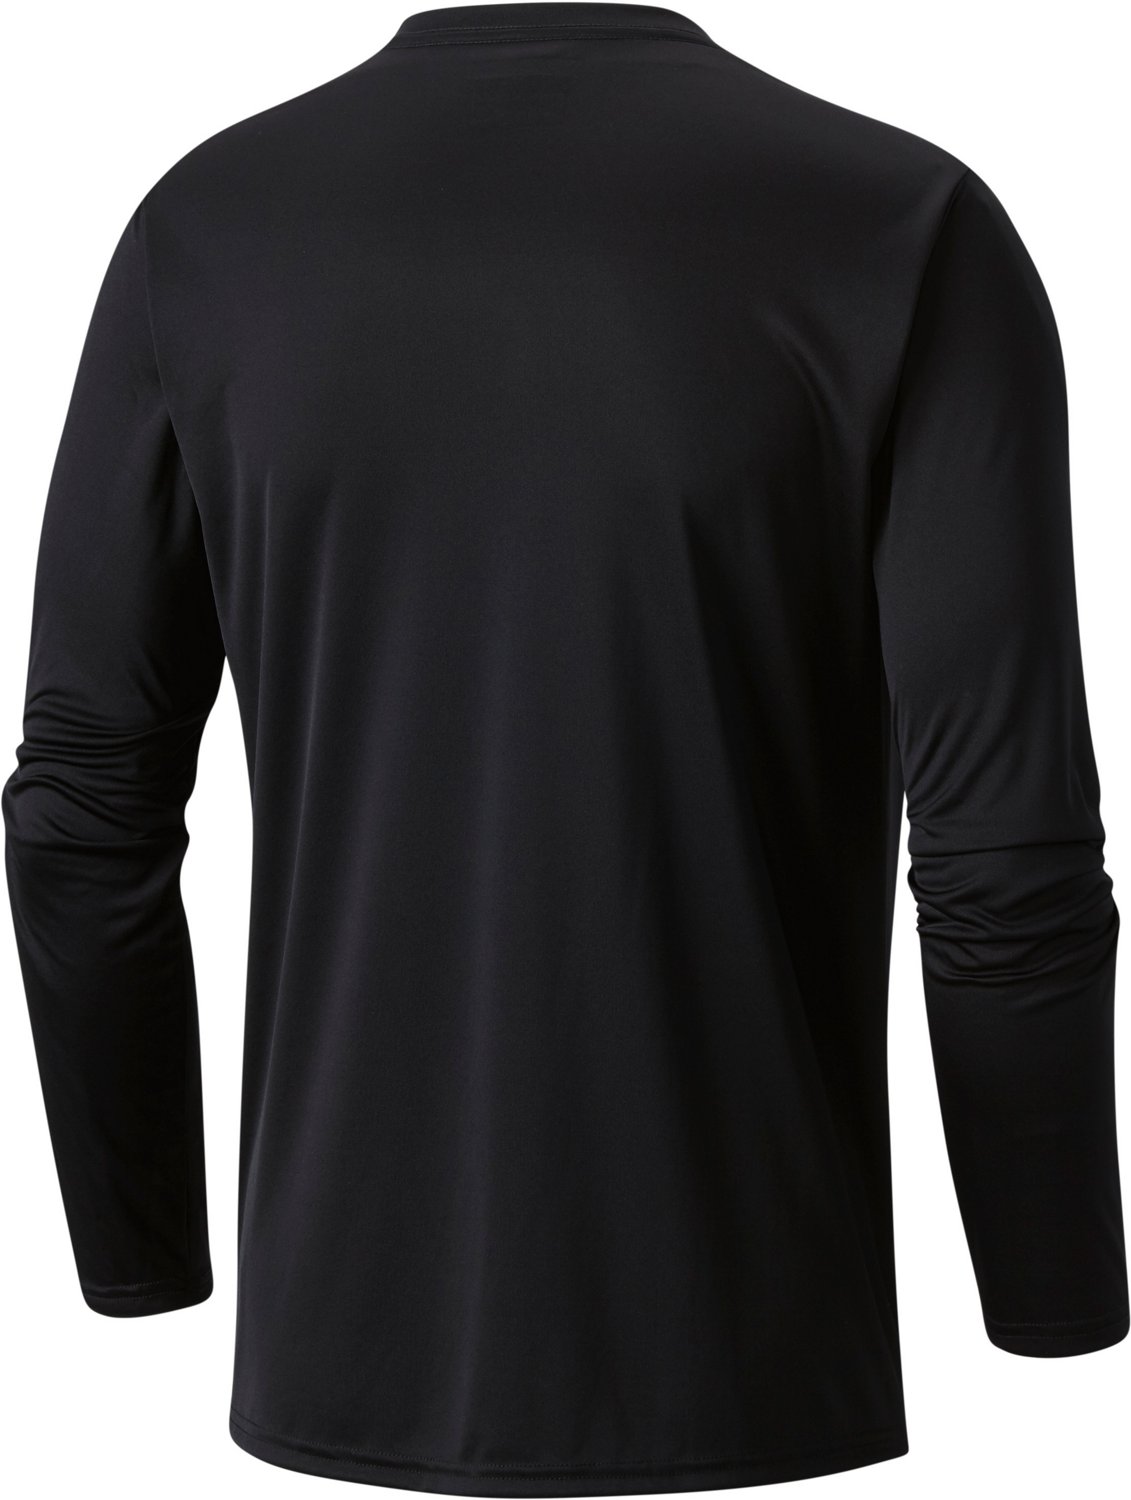 Columbia Sportswear Men's Terminal Tackle PFG Sleeve Long Sleeve Shirt